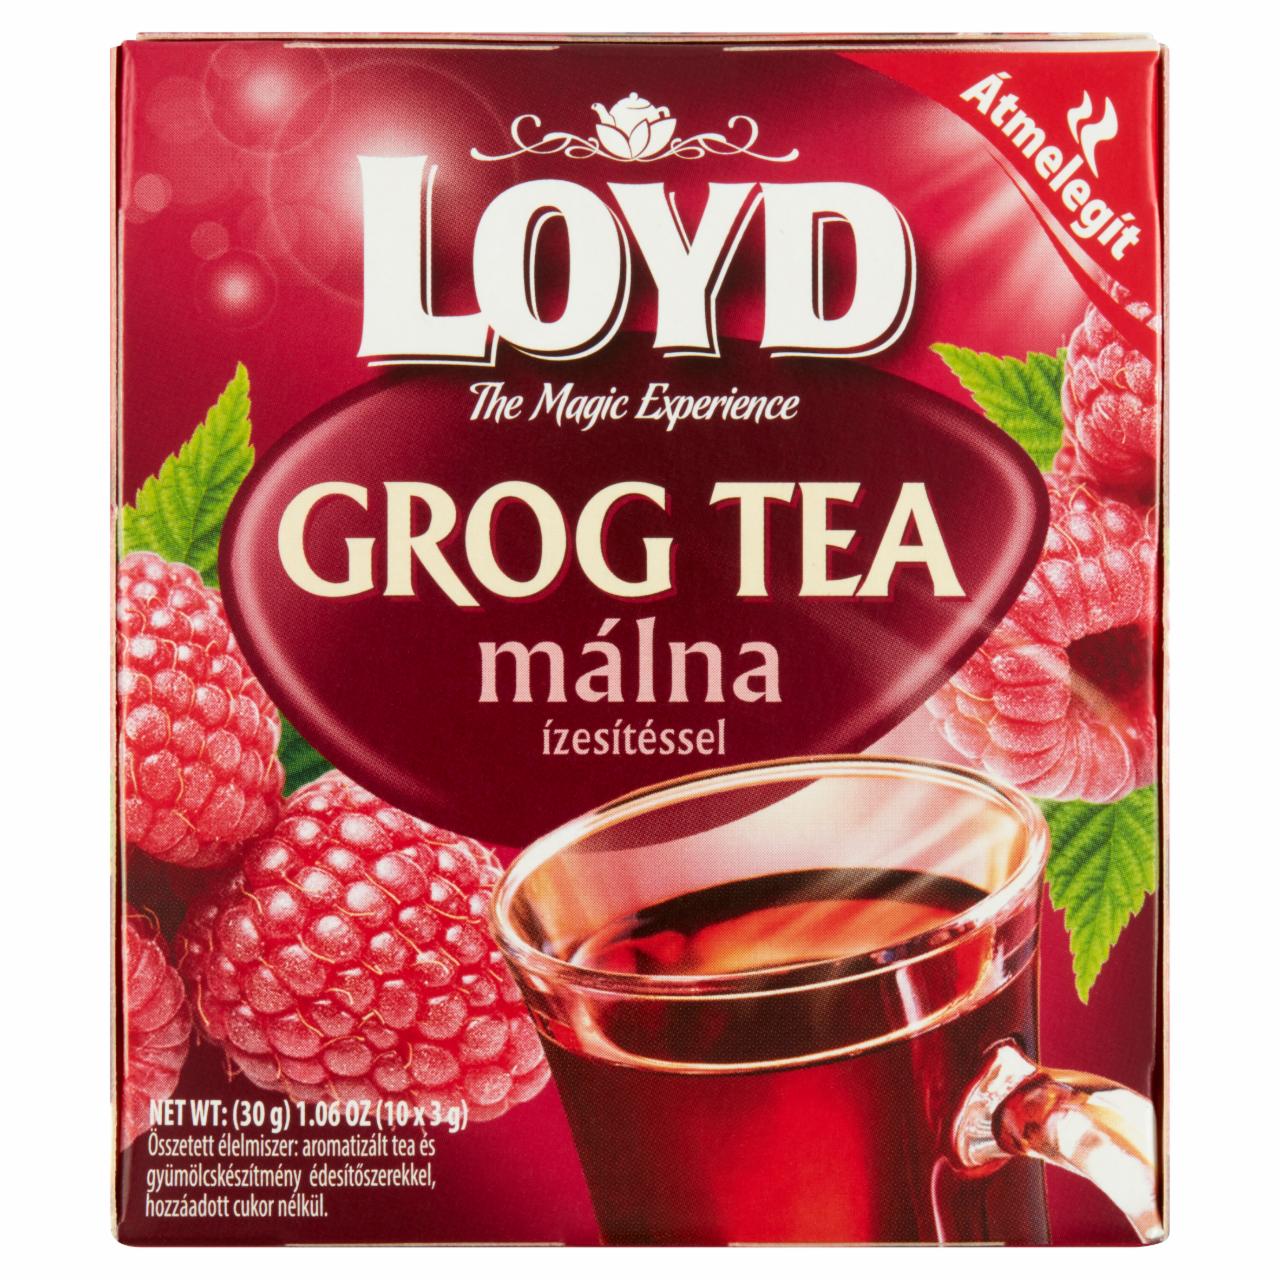 Képek - Loyd grog tea málna ízű 10 filter 30 g